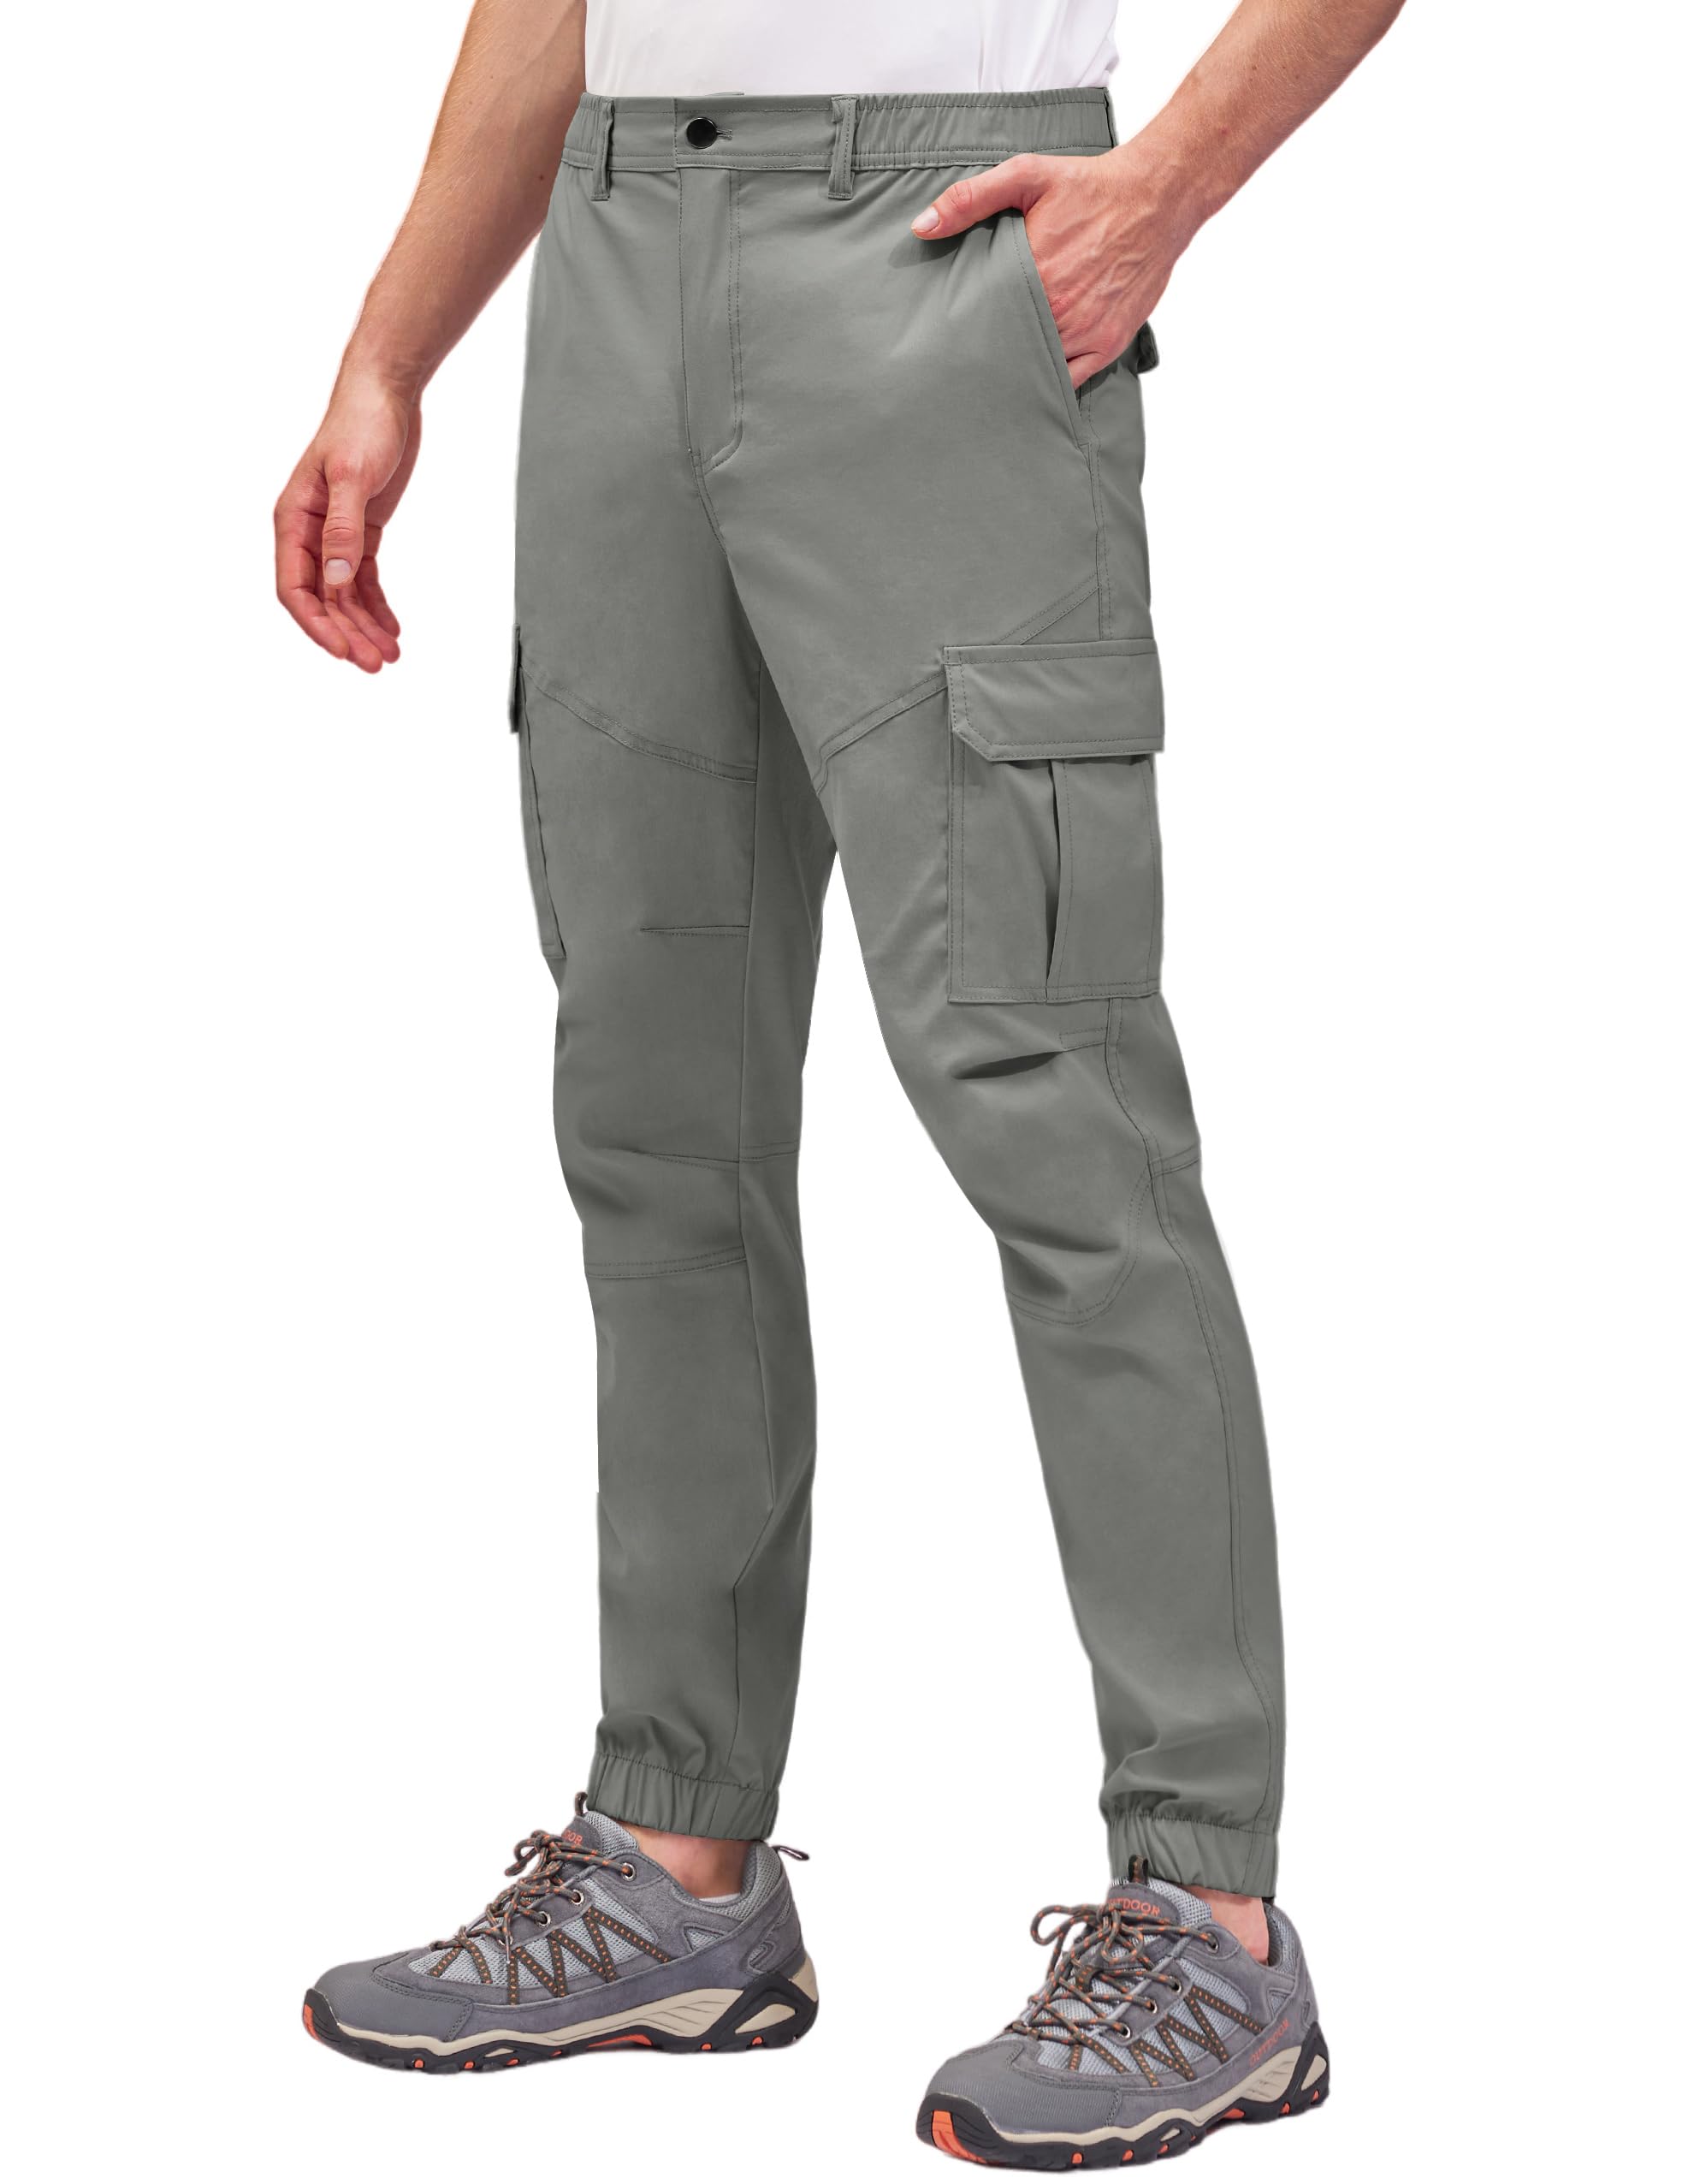 Puli Men's Stretch Cargo Pants with 7 Pockets, Grey / 38 / 30-31